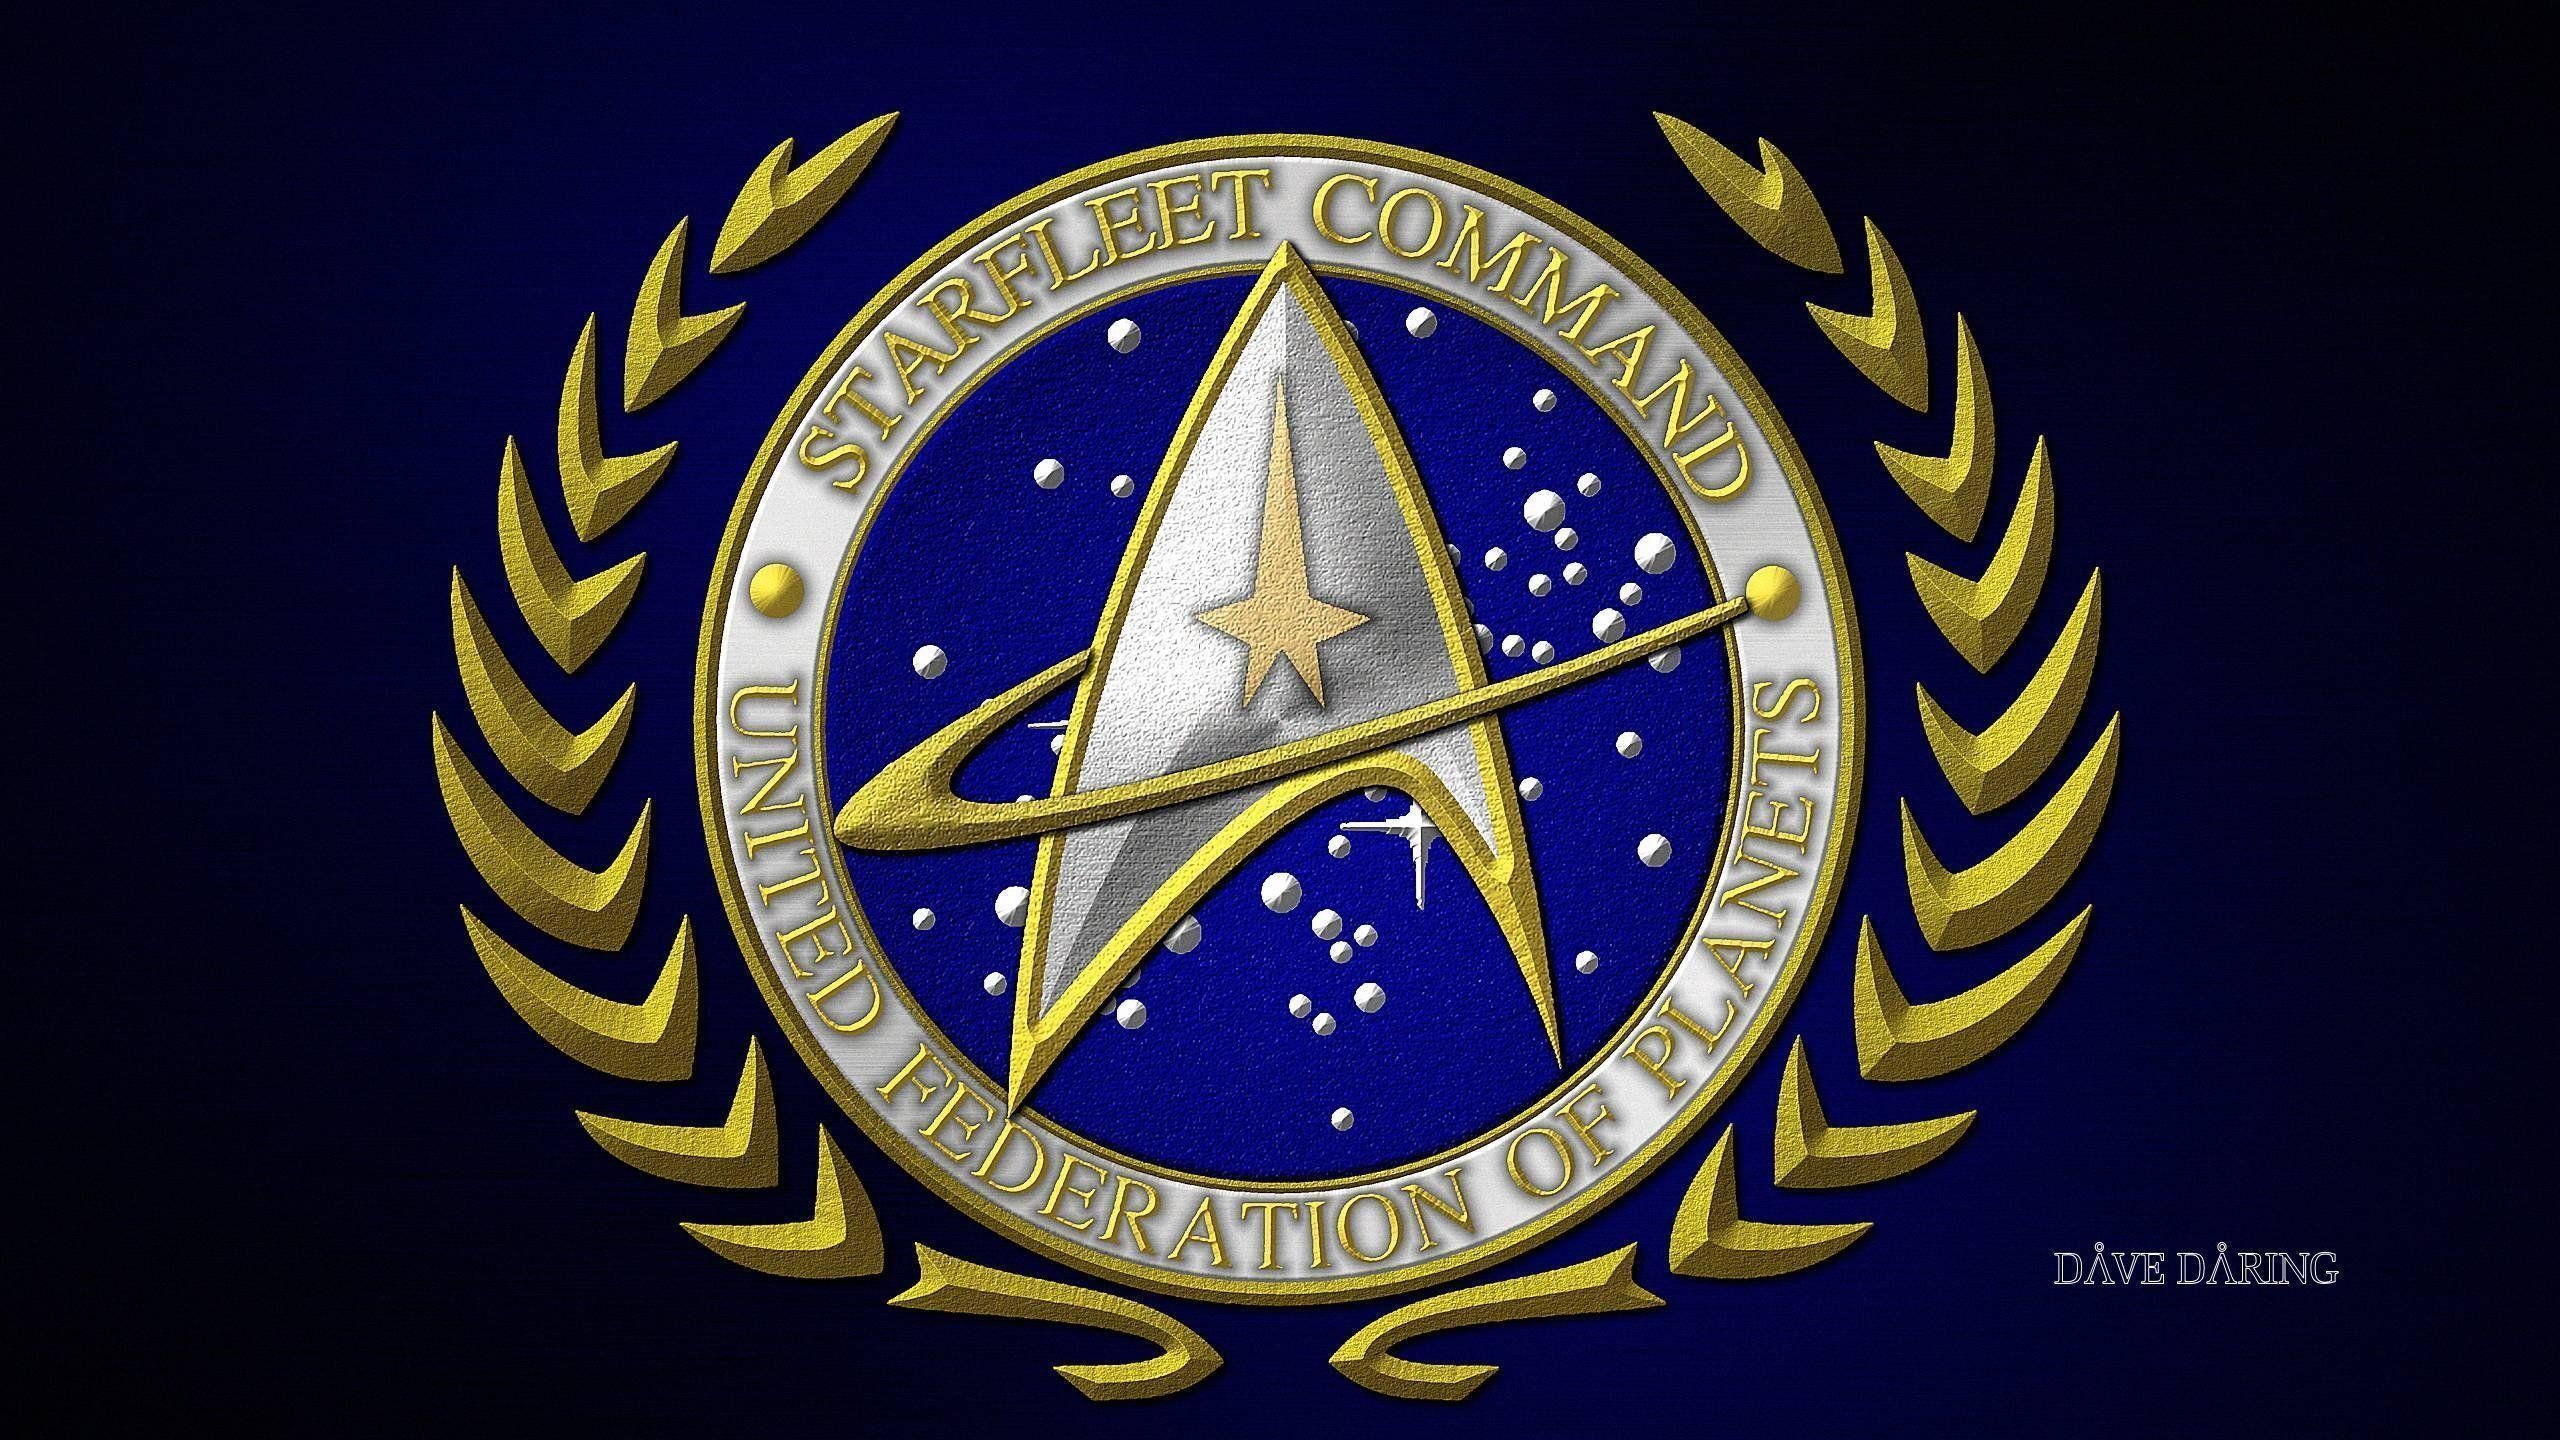 2560x1440 Star Trek Star Fleet Command Great Seal by Dave-Daring on DeviantArt